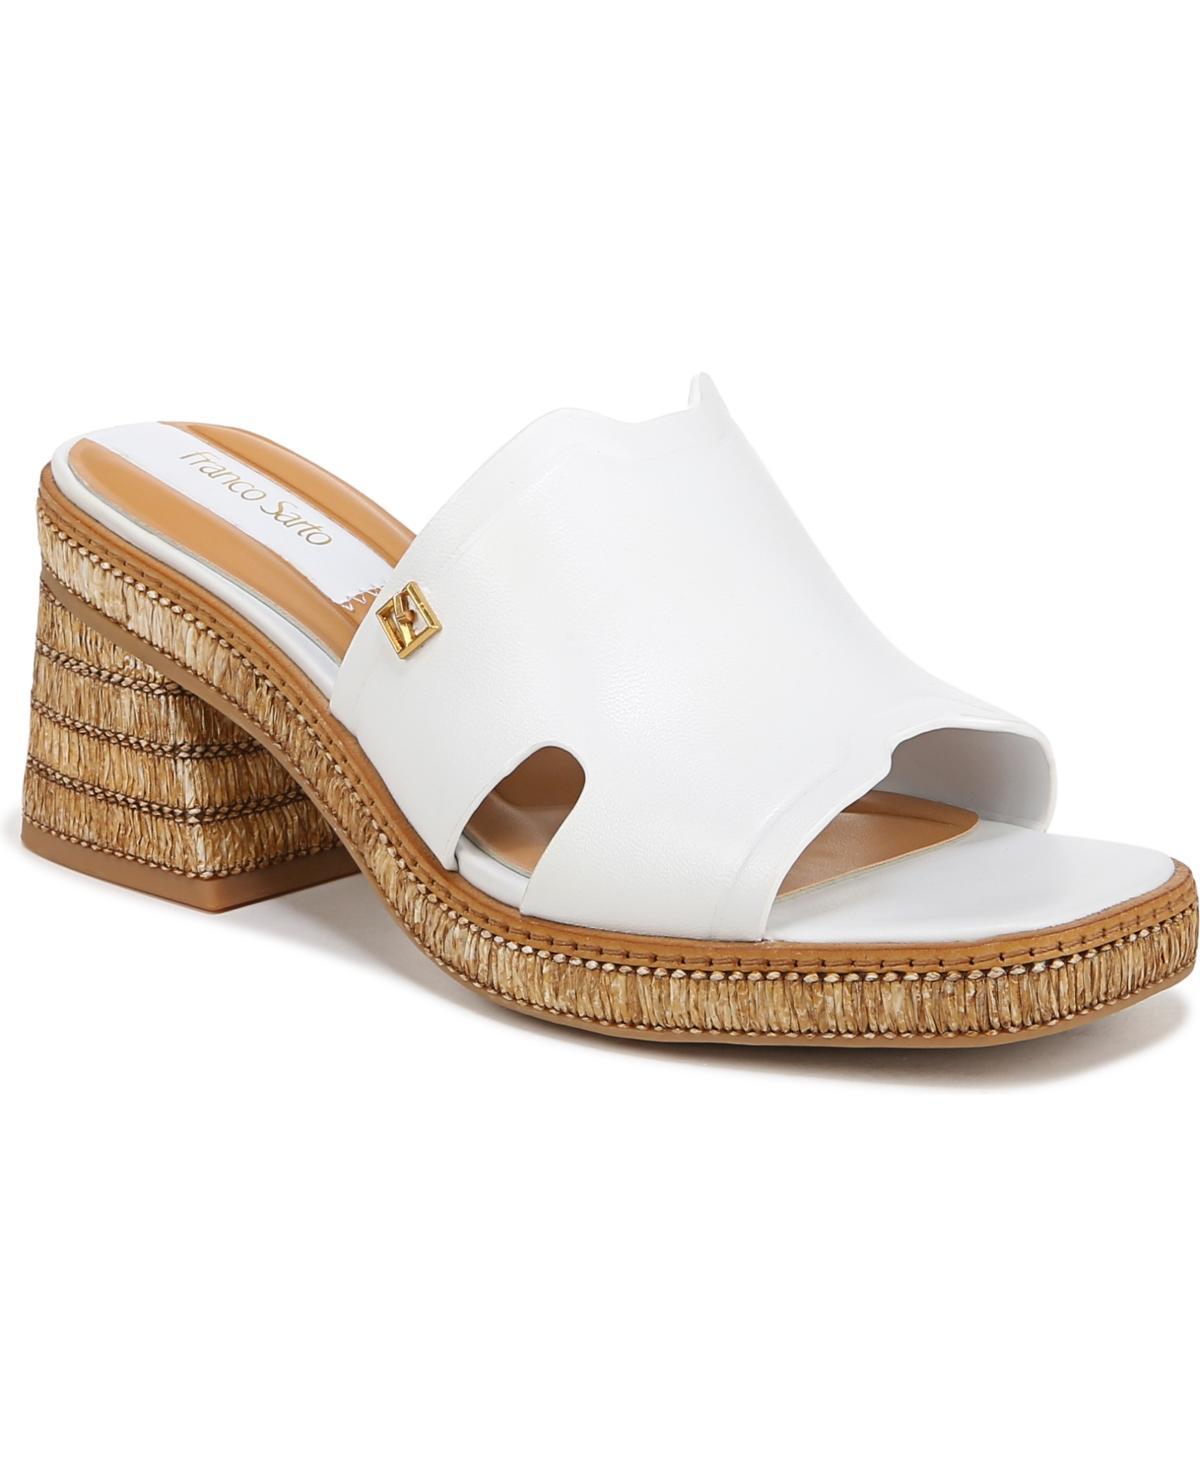 Franco Sarto Florence Slide Sandals Product Image